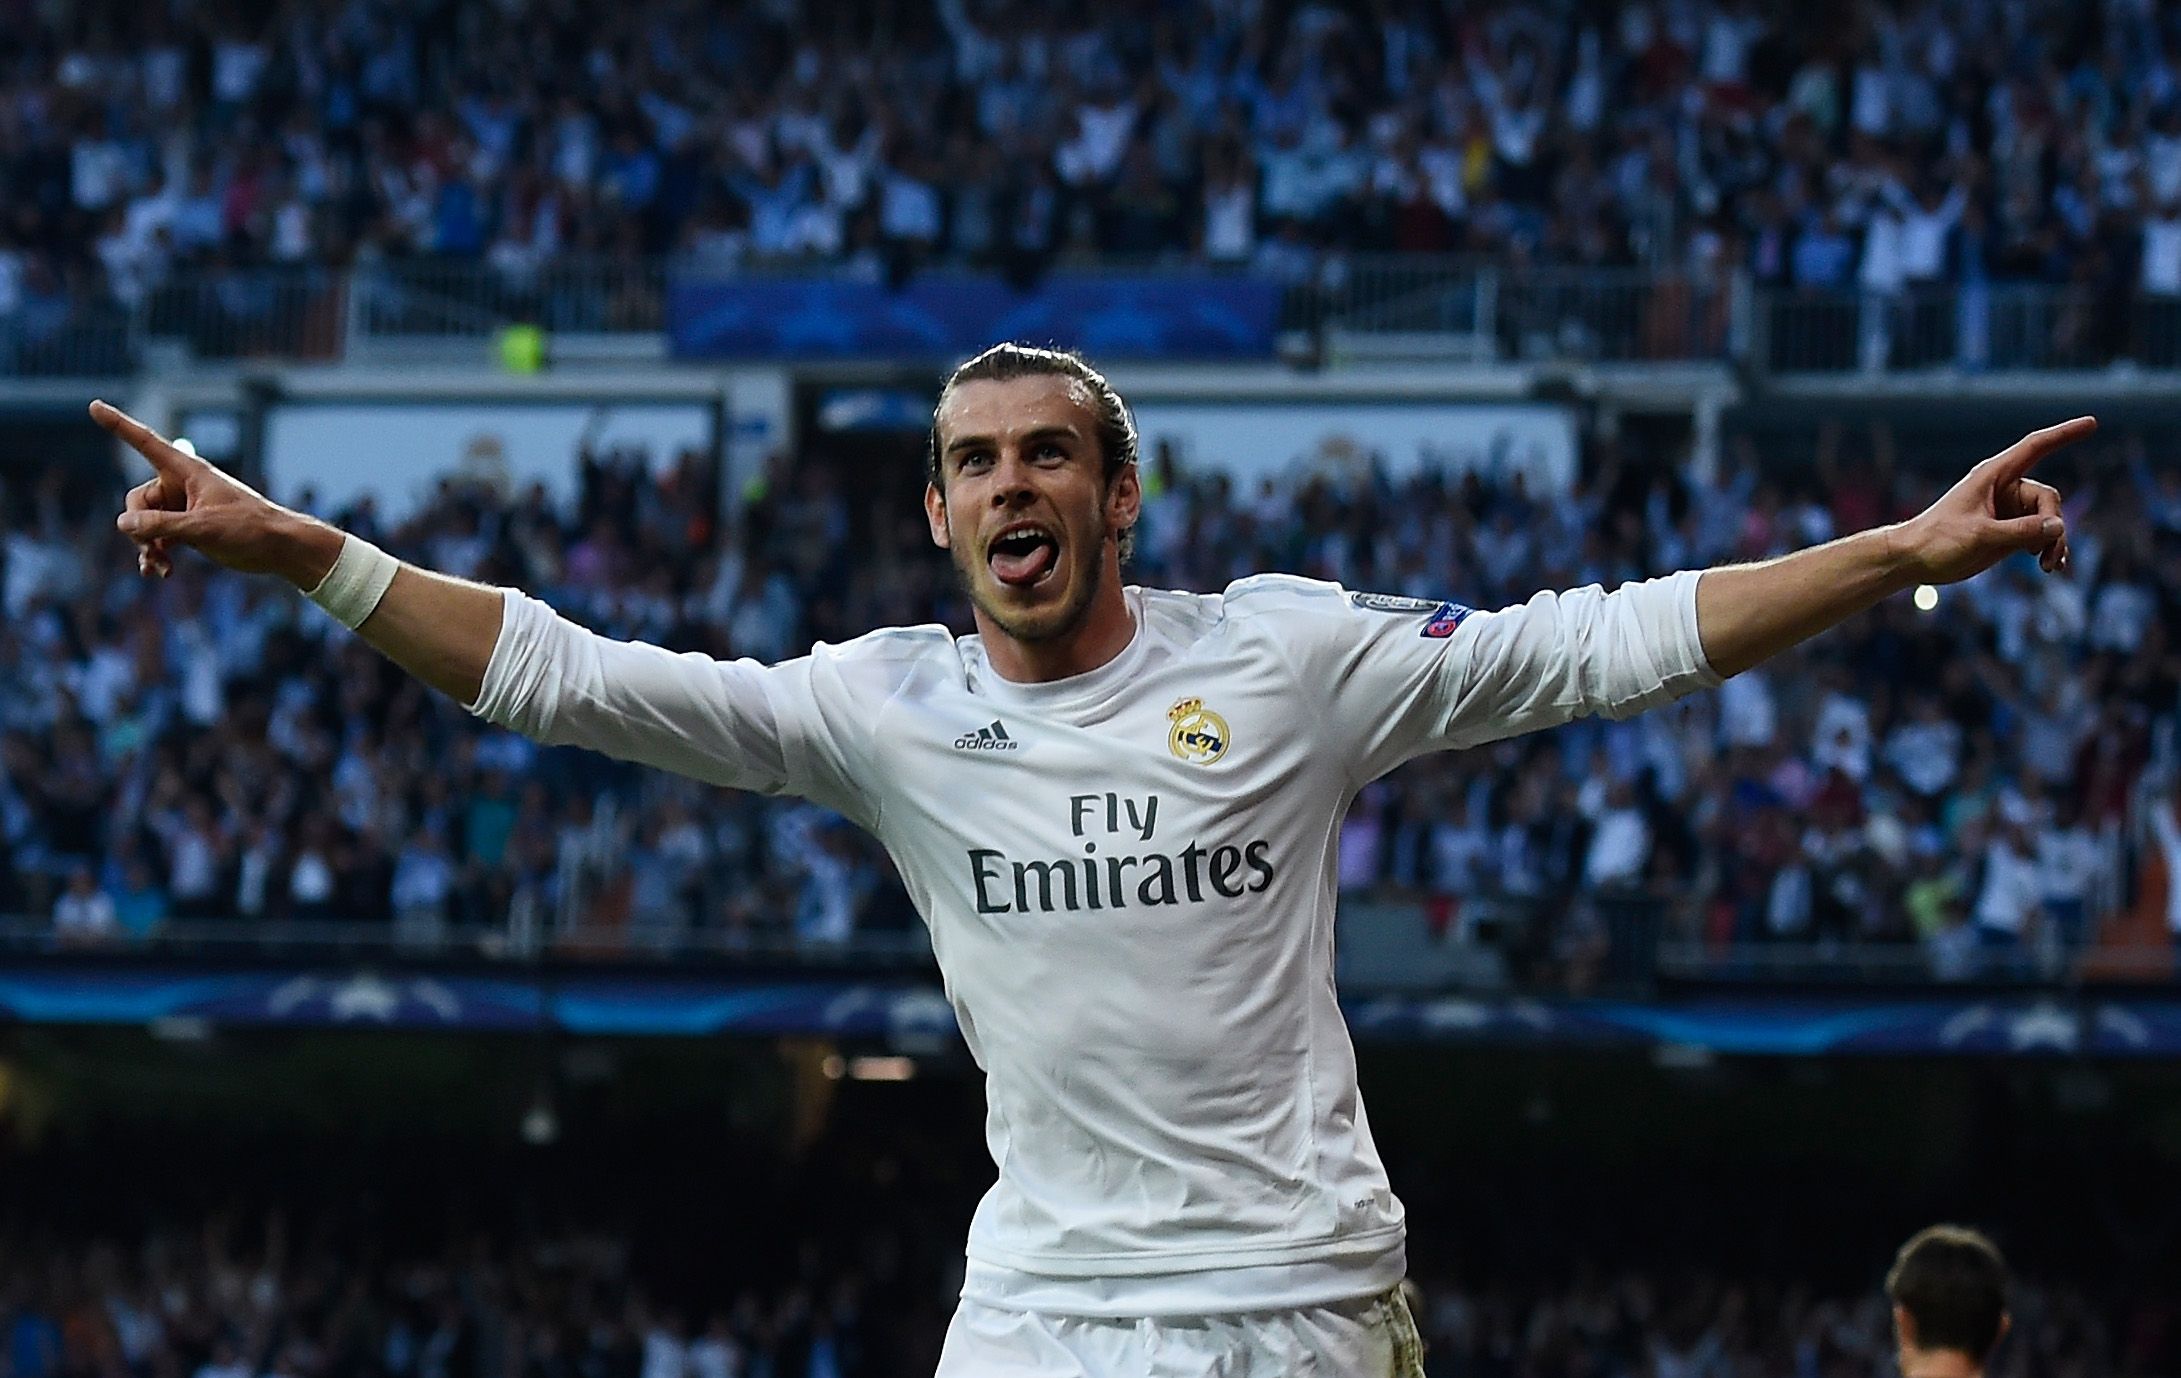 Real Madrid footballer Gareth Bale